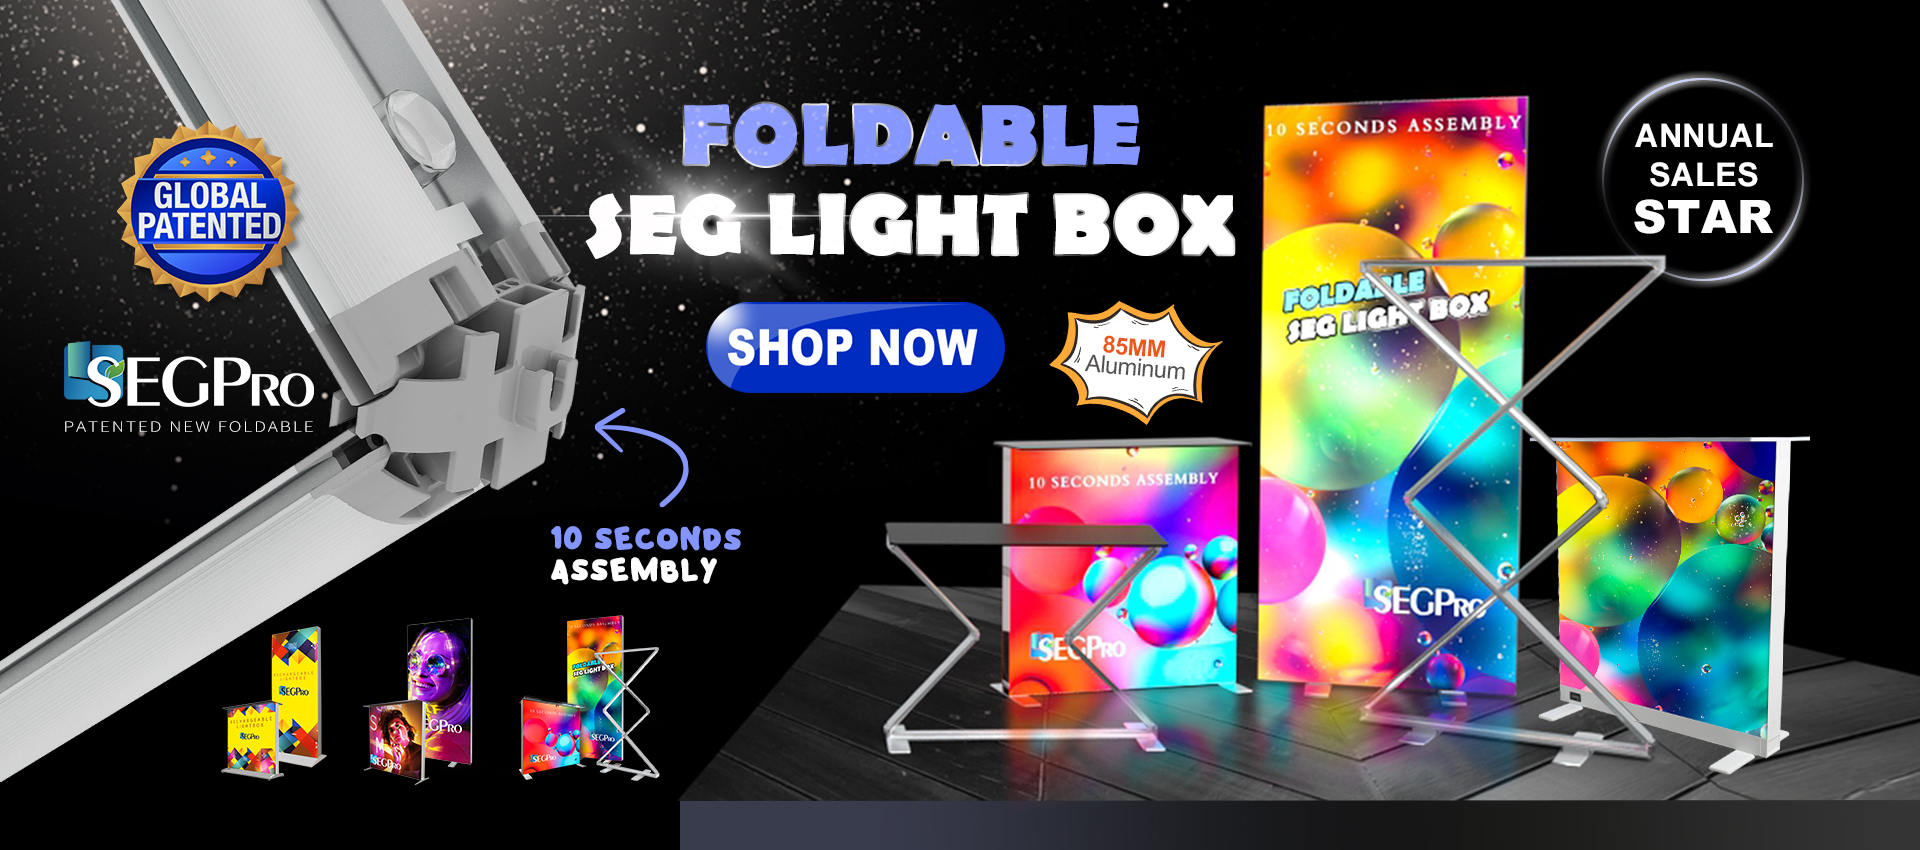 Lintel Foldable SEG Light Box